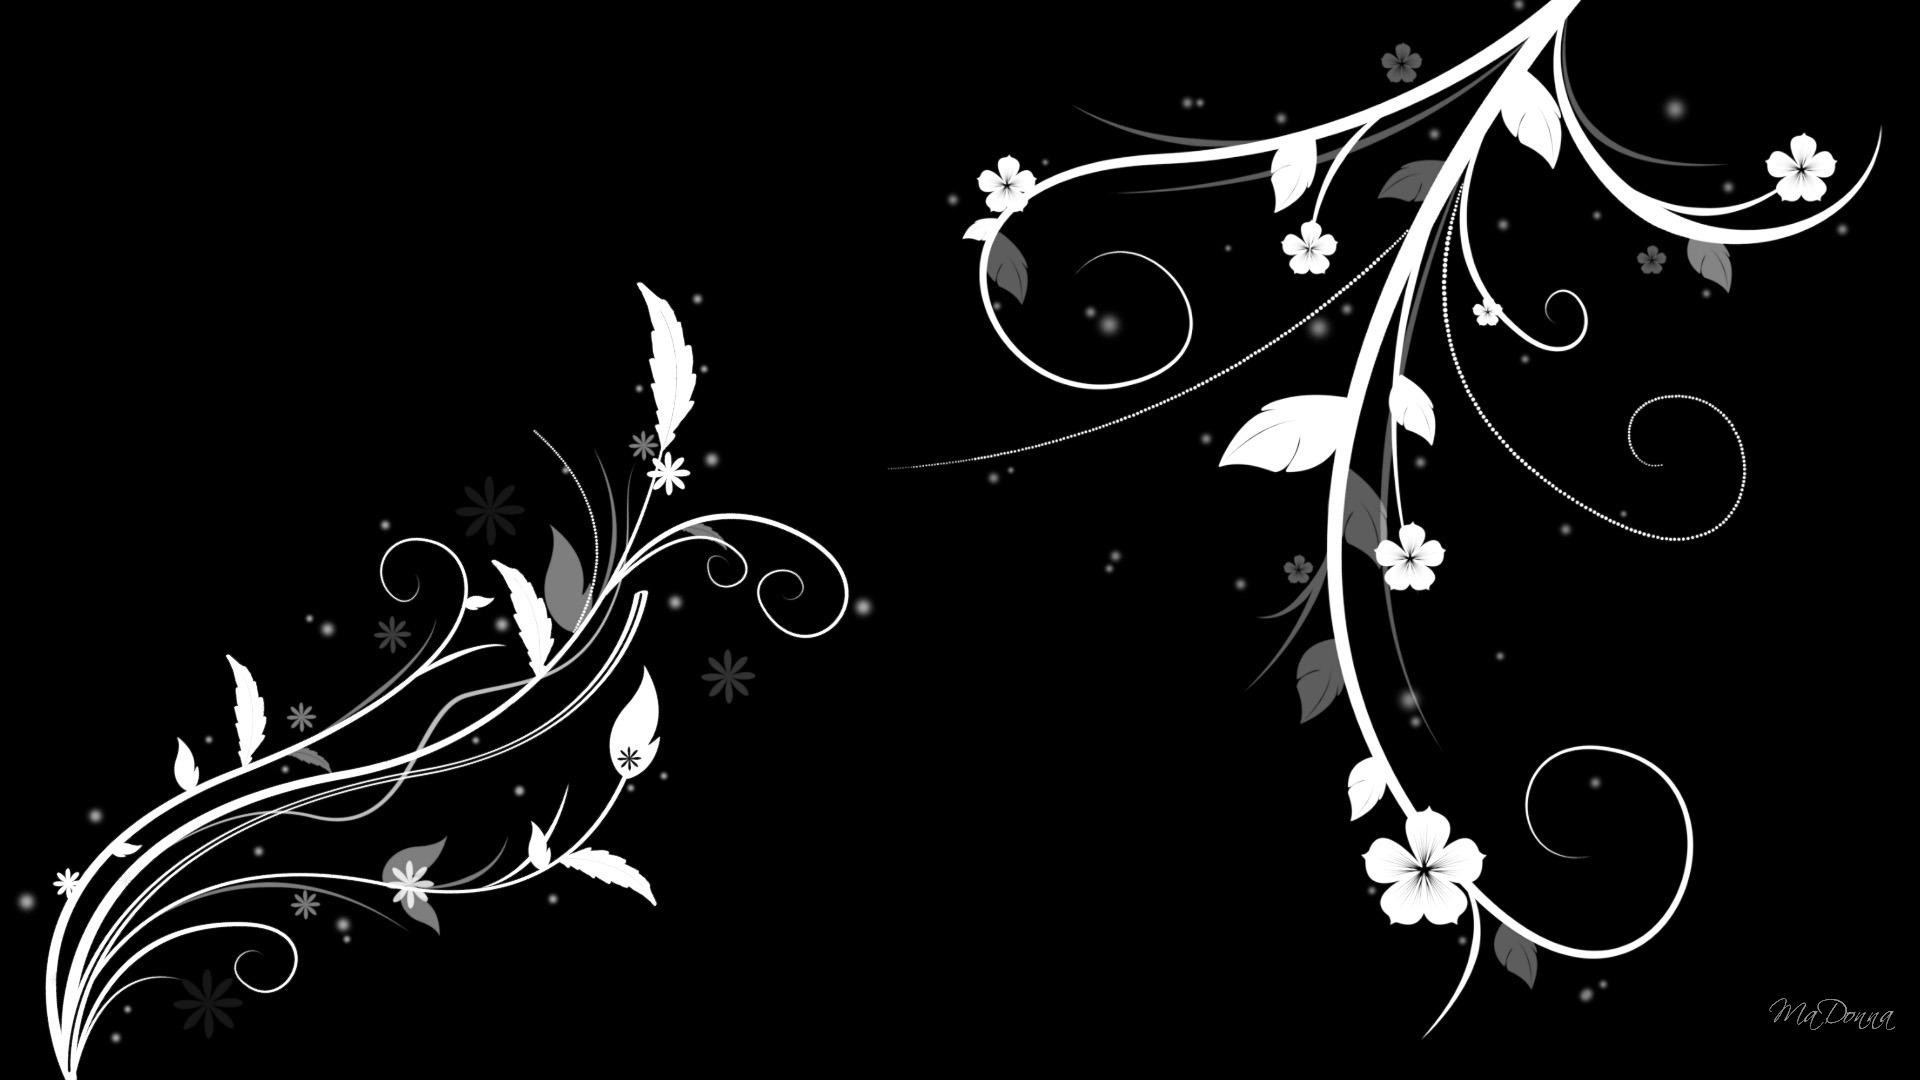 Wallpaper Of Black Flowers Black And White Flowers Wallpapers Hd Pixelstalk